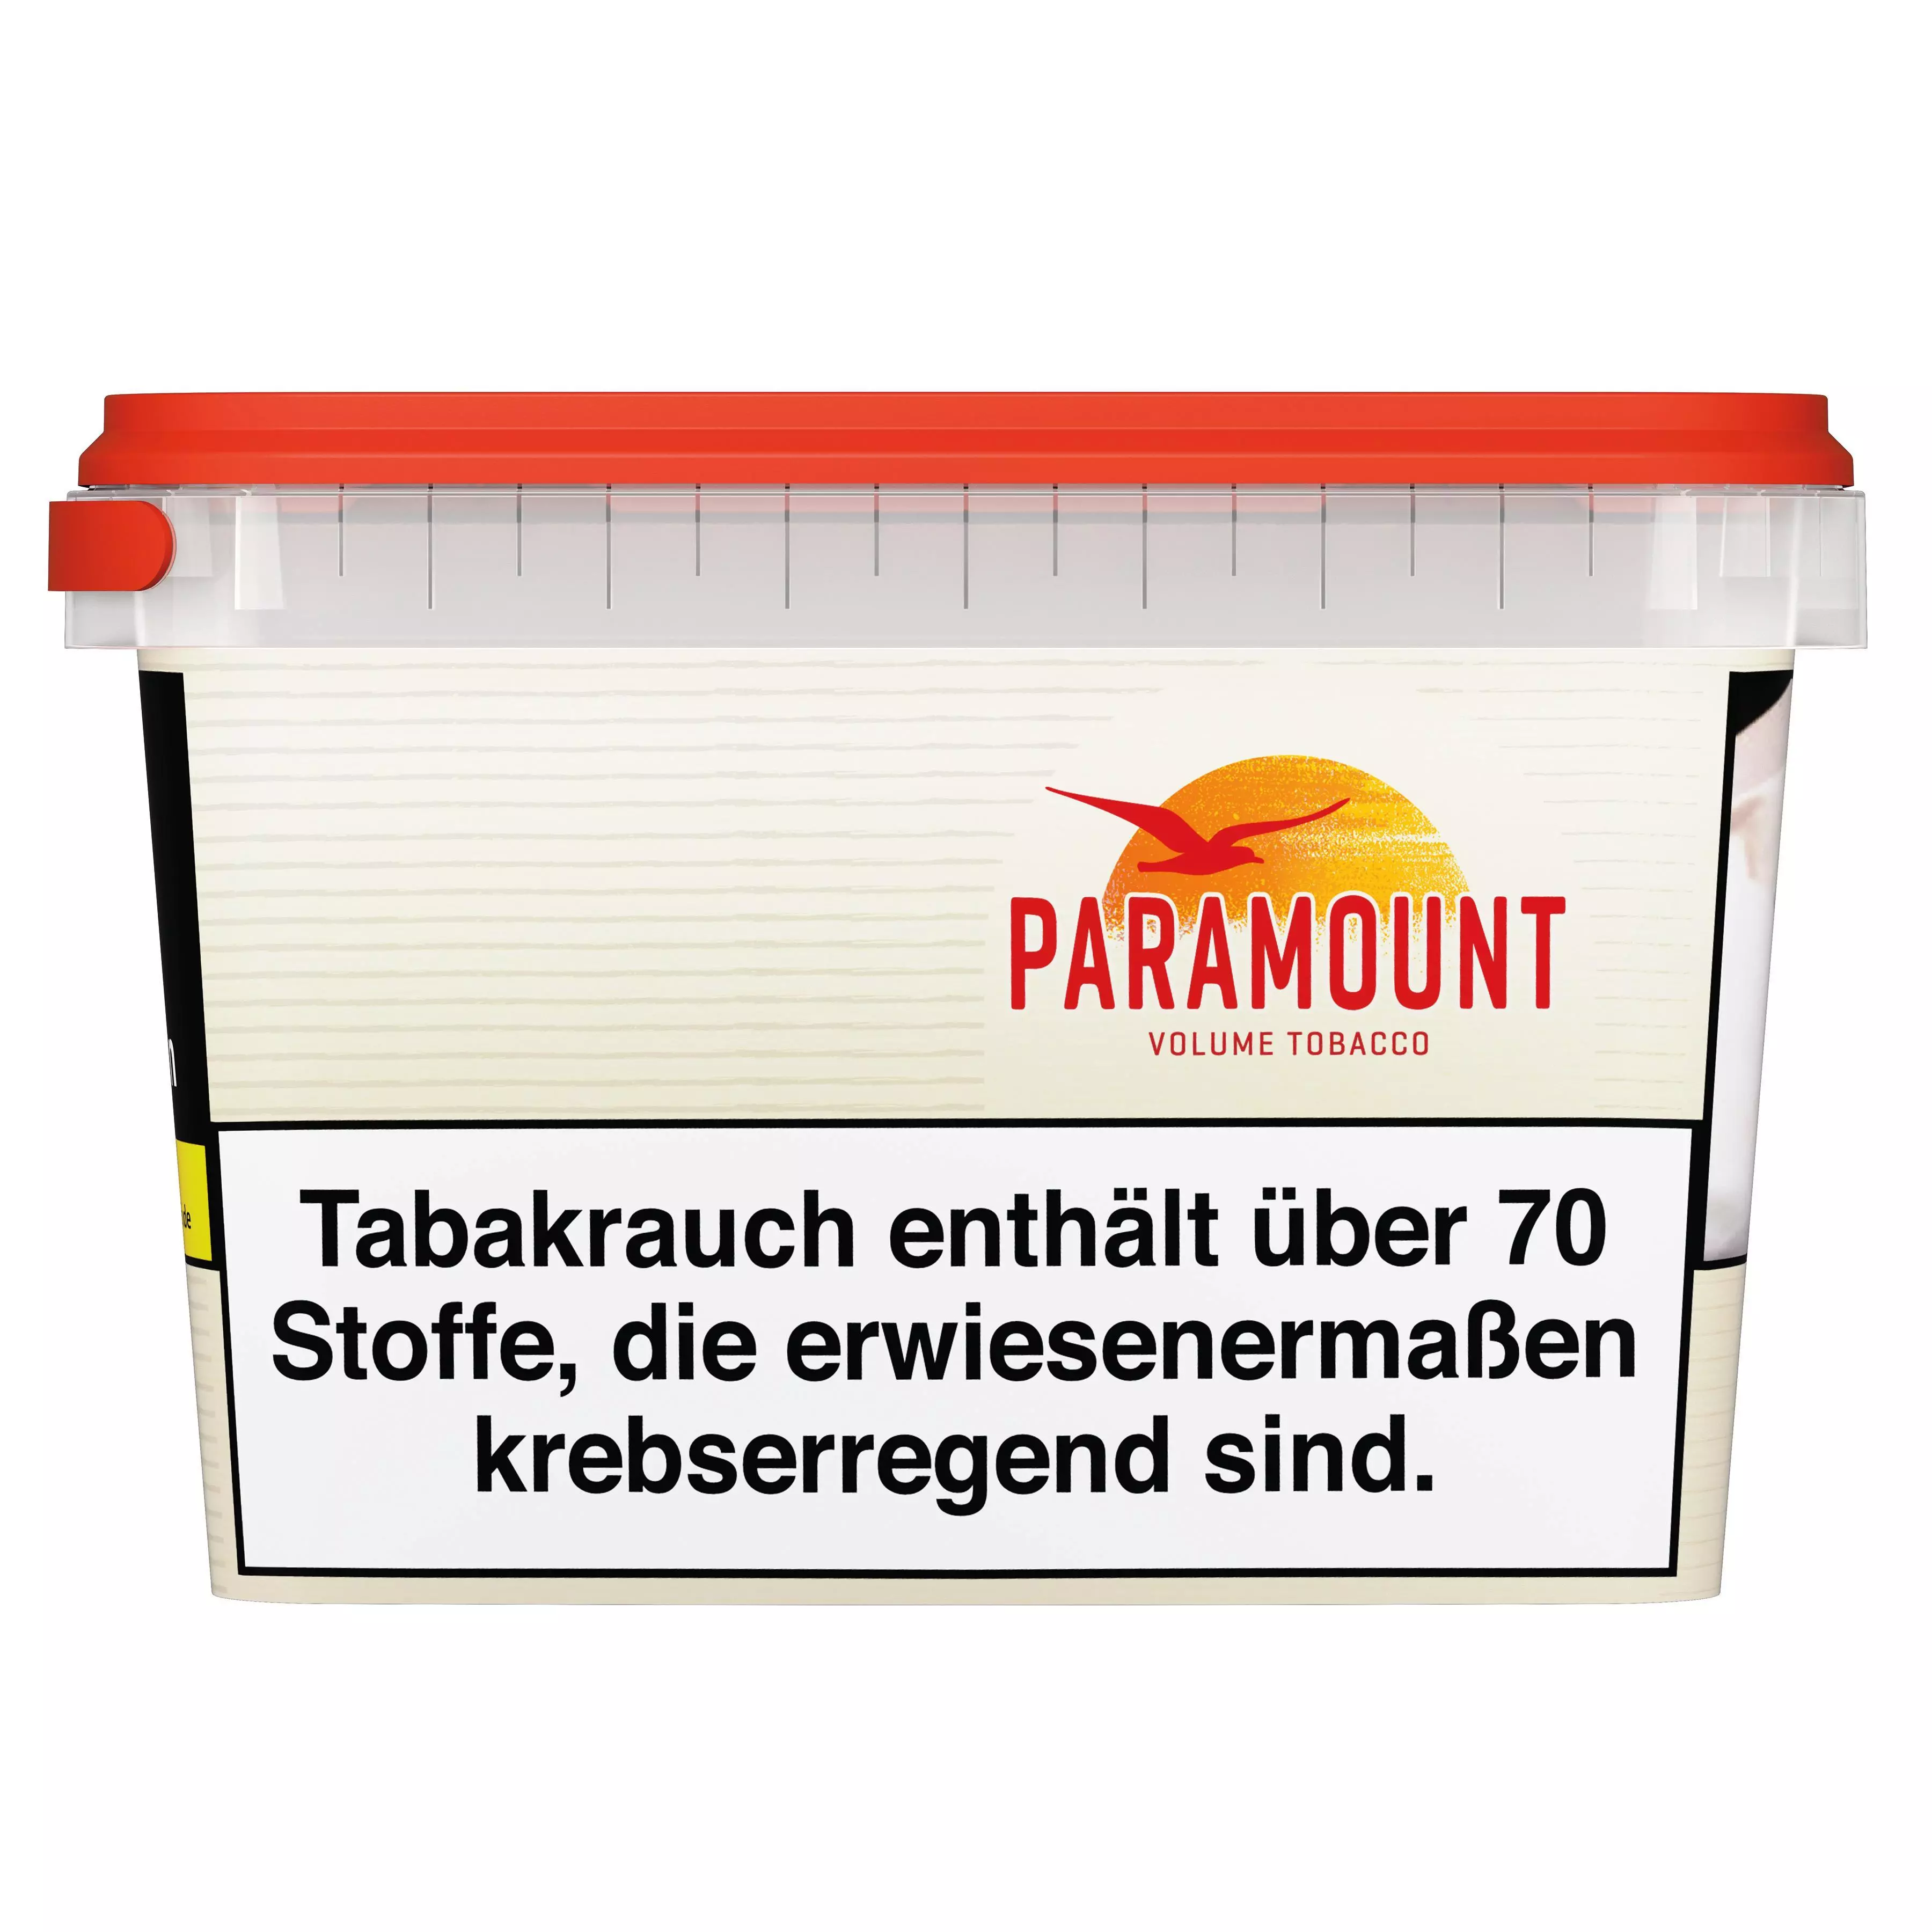 PARAMOUNT Volumen Tobacco 1 x 155g Tabak